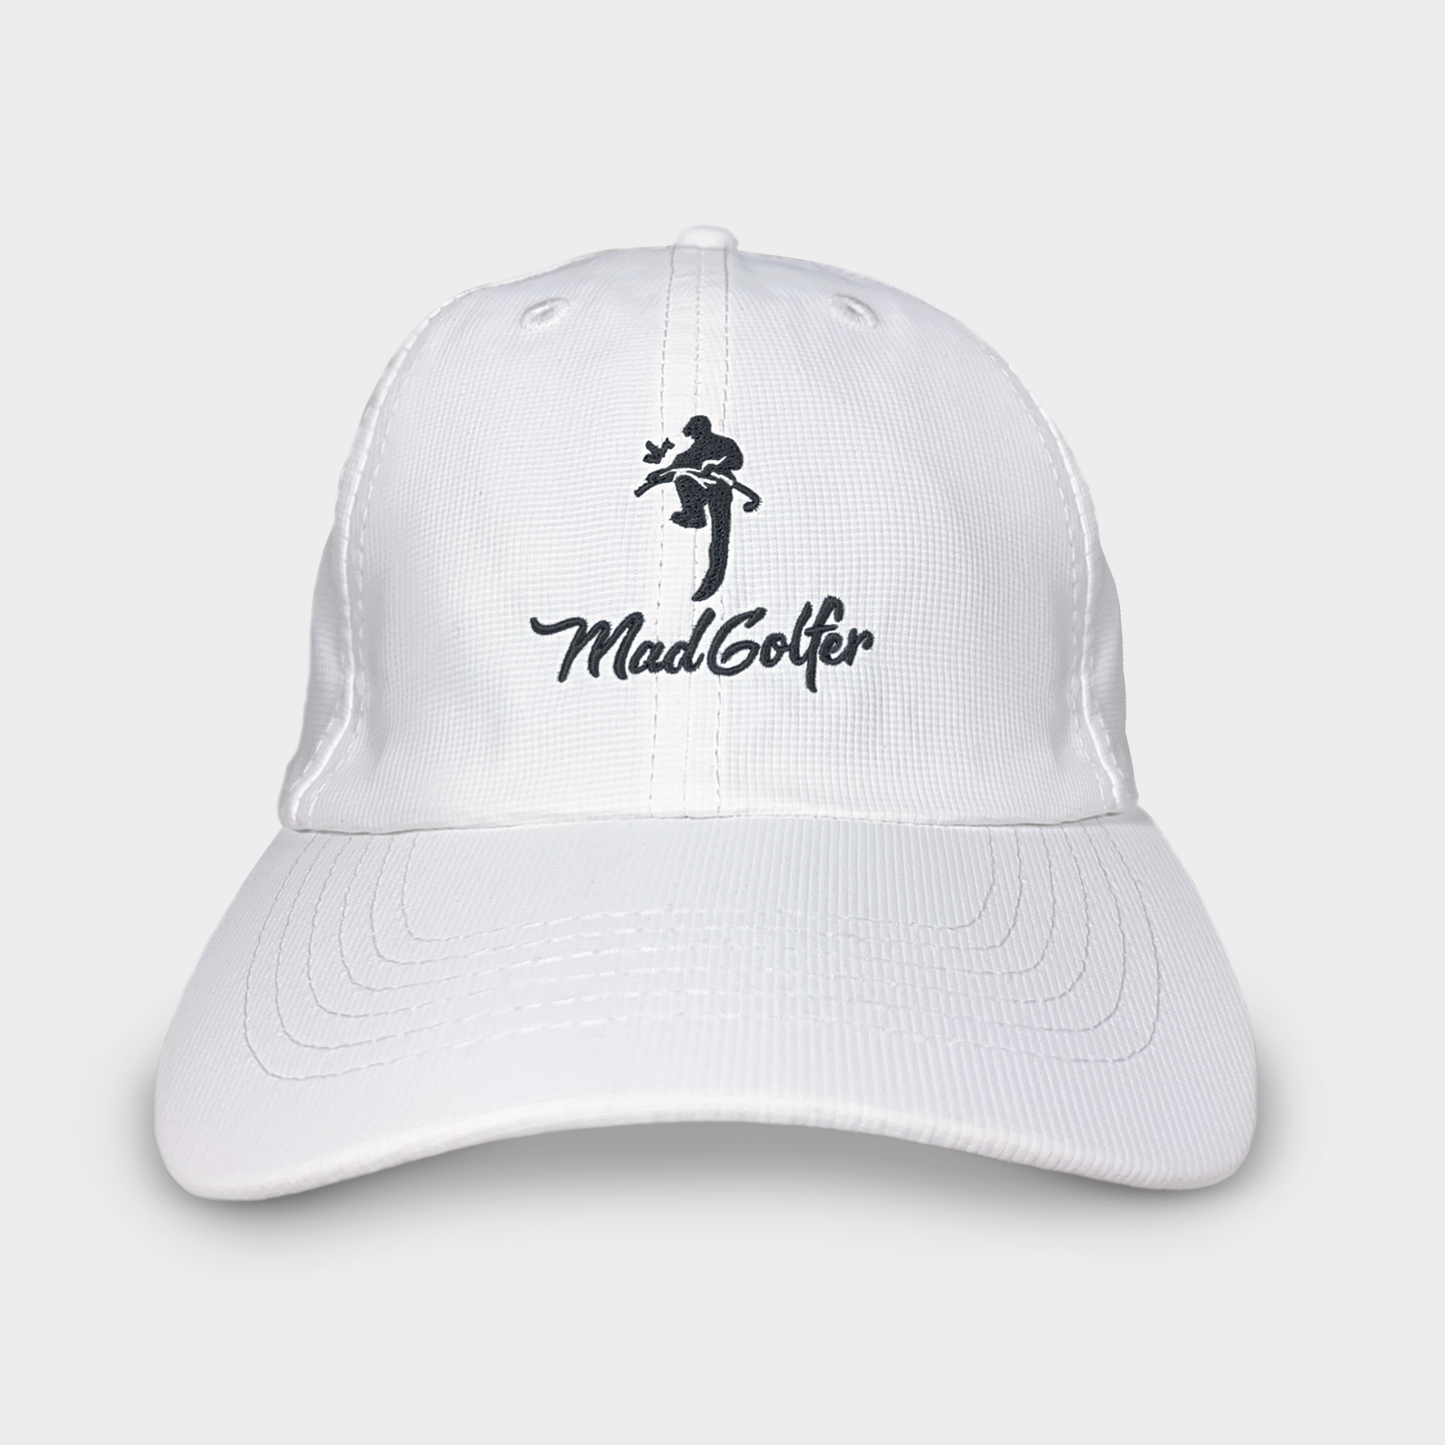 MadGolfer Hat - White